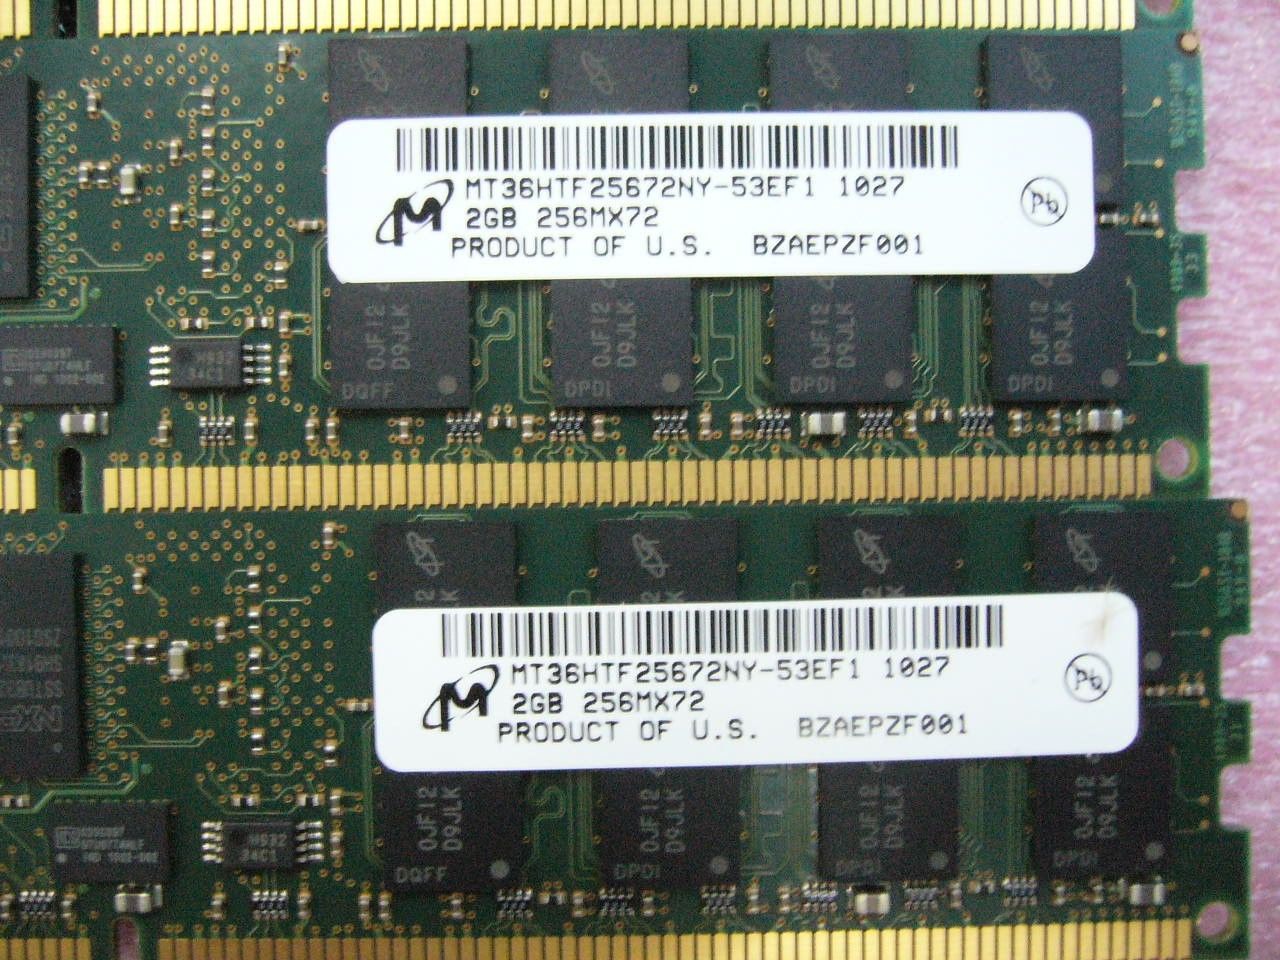 8GB Lot, QTY 4x 2GB DDR2 PC2-4200R ECC Registered Memory for IBM P5 FRU 12R6446 - zum Schließen ins Bild klicken